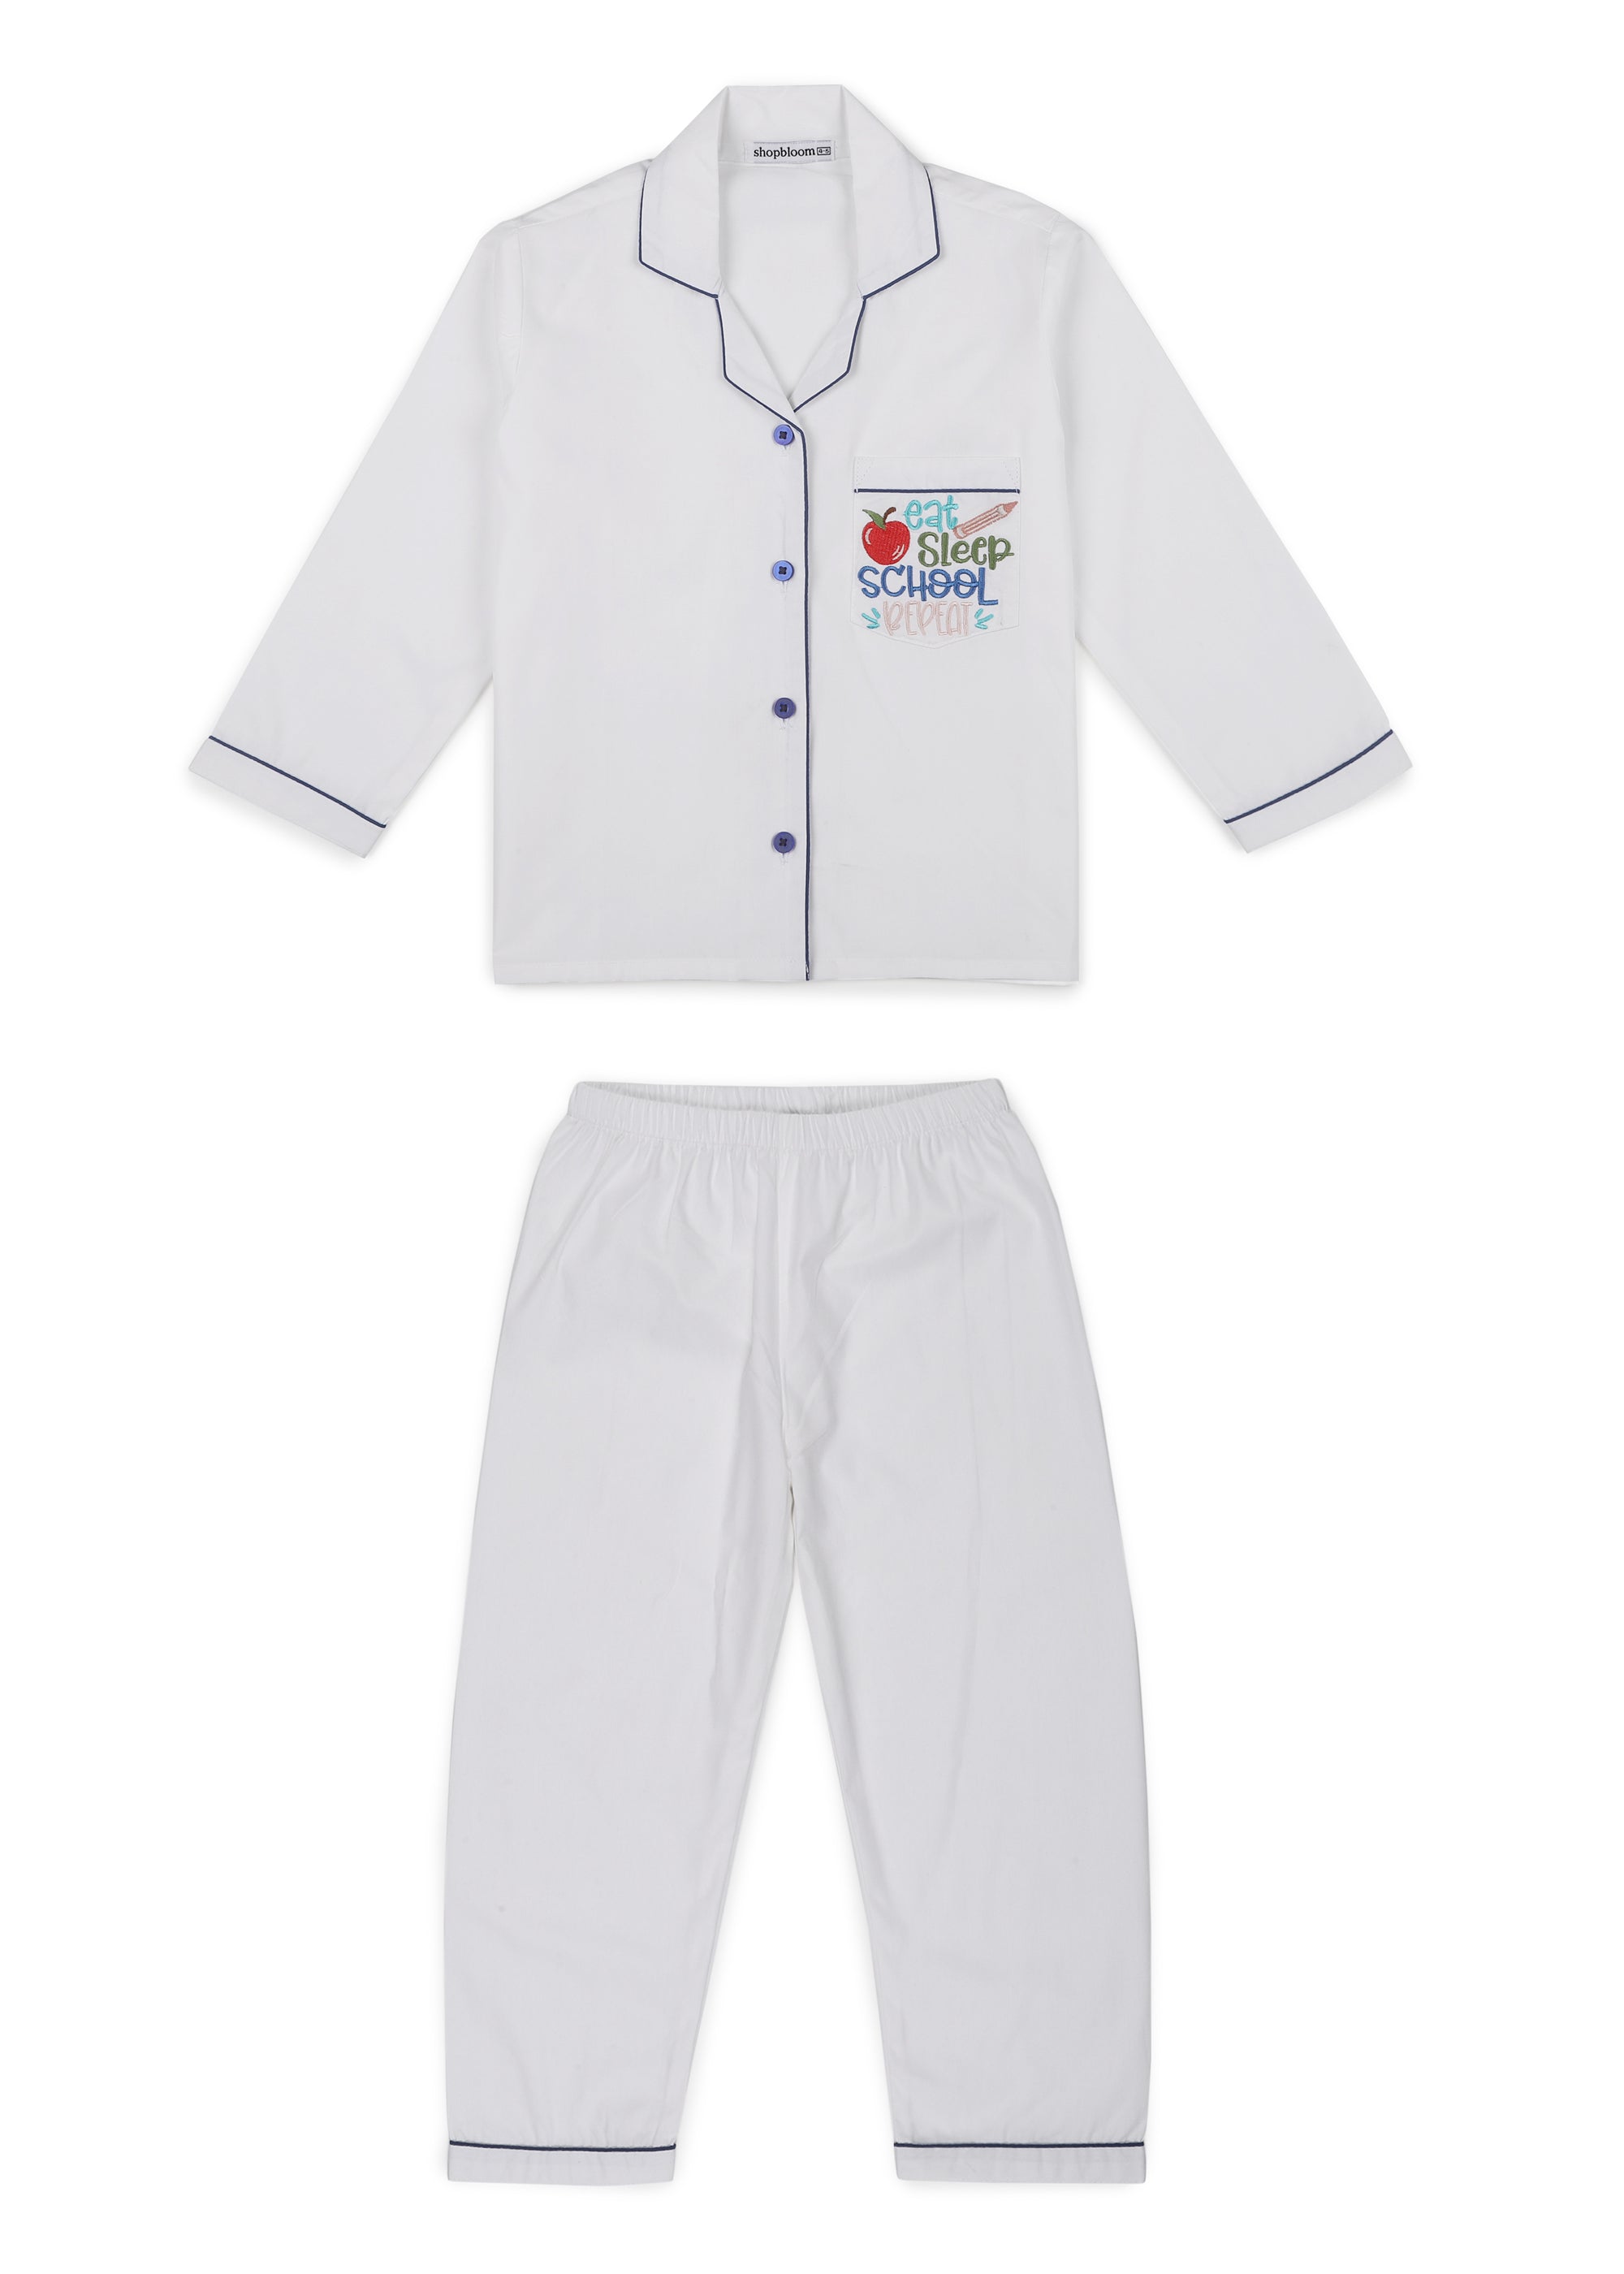 Eat Sleep School Repeat Embroidered Pocket Long Sleeve Kids Night Suit - Shopbloom